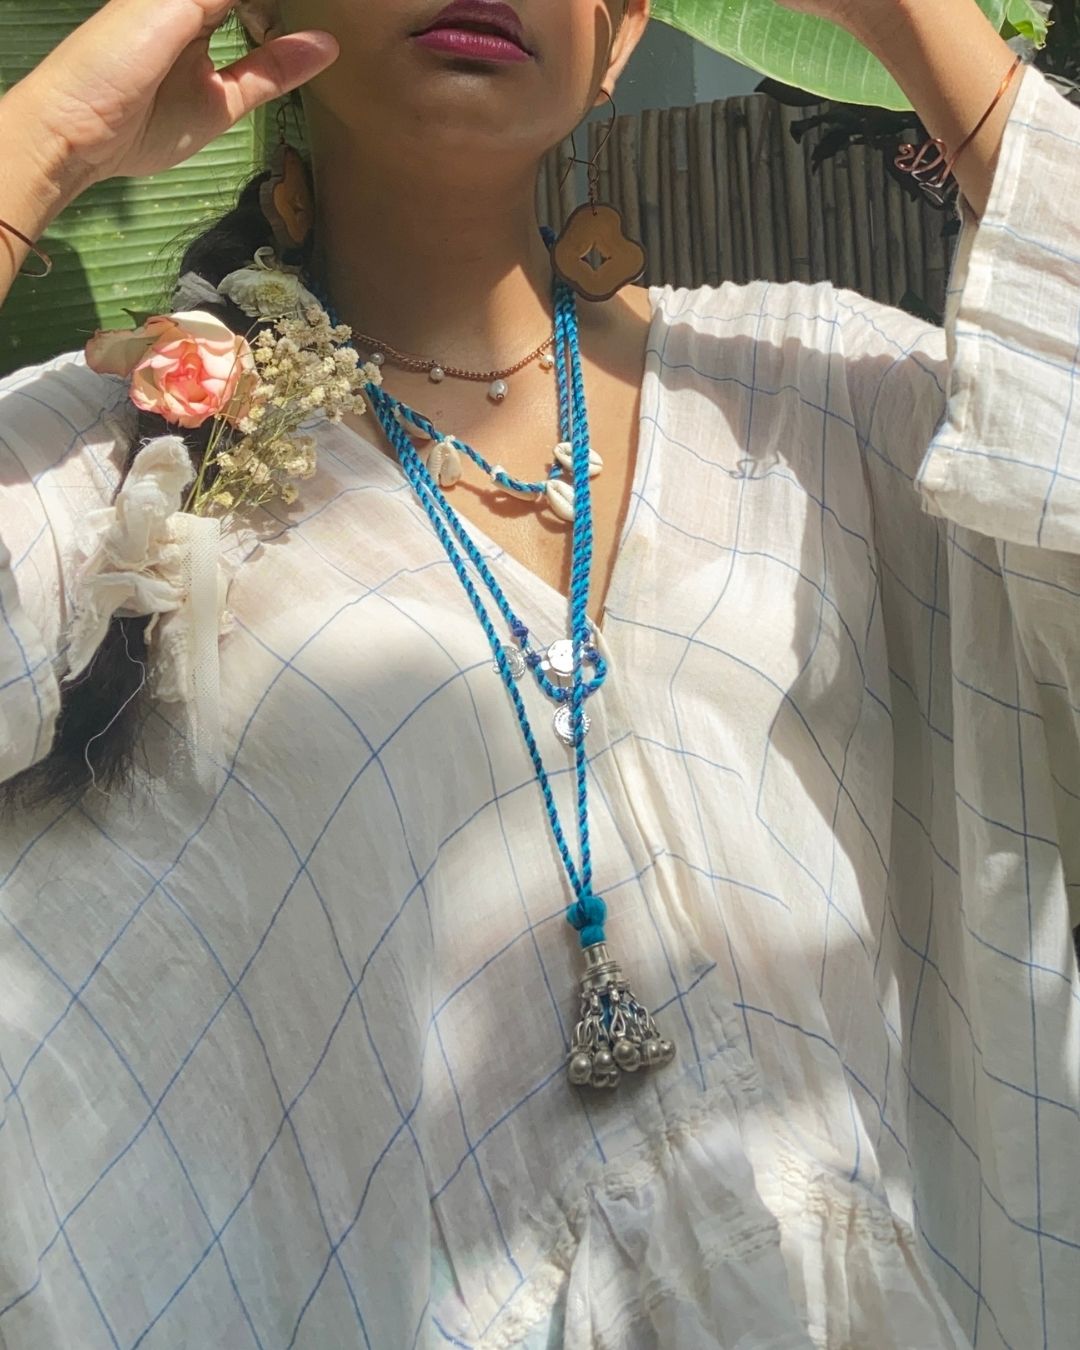 Umi Layered necklace